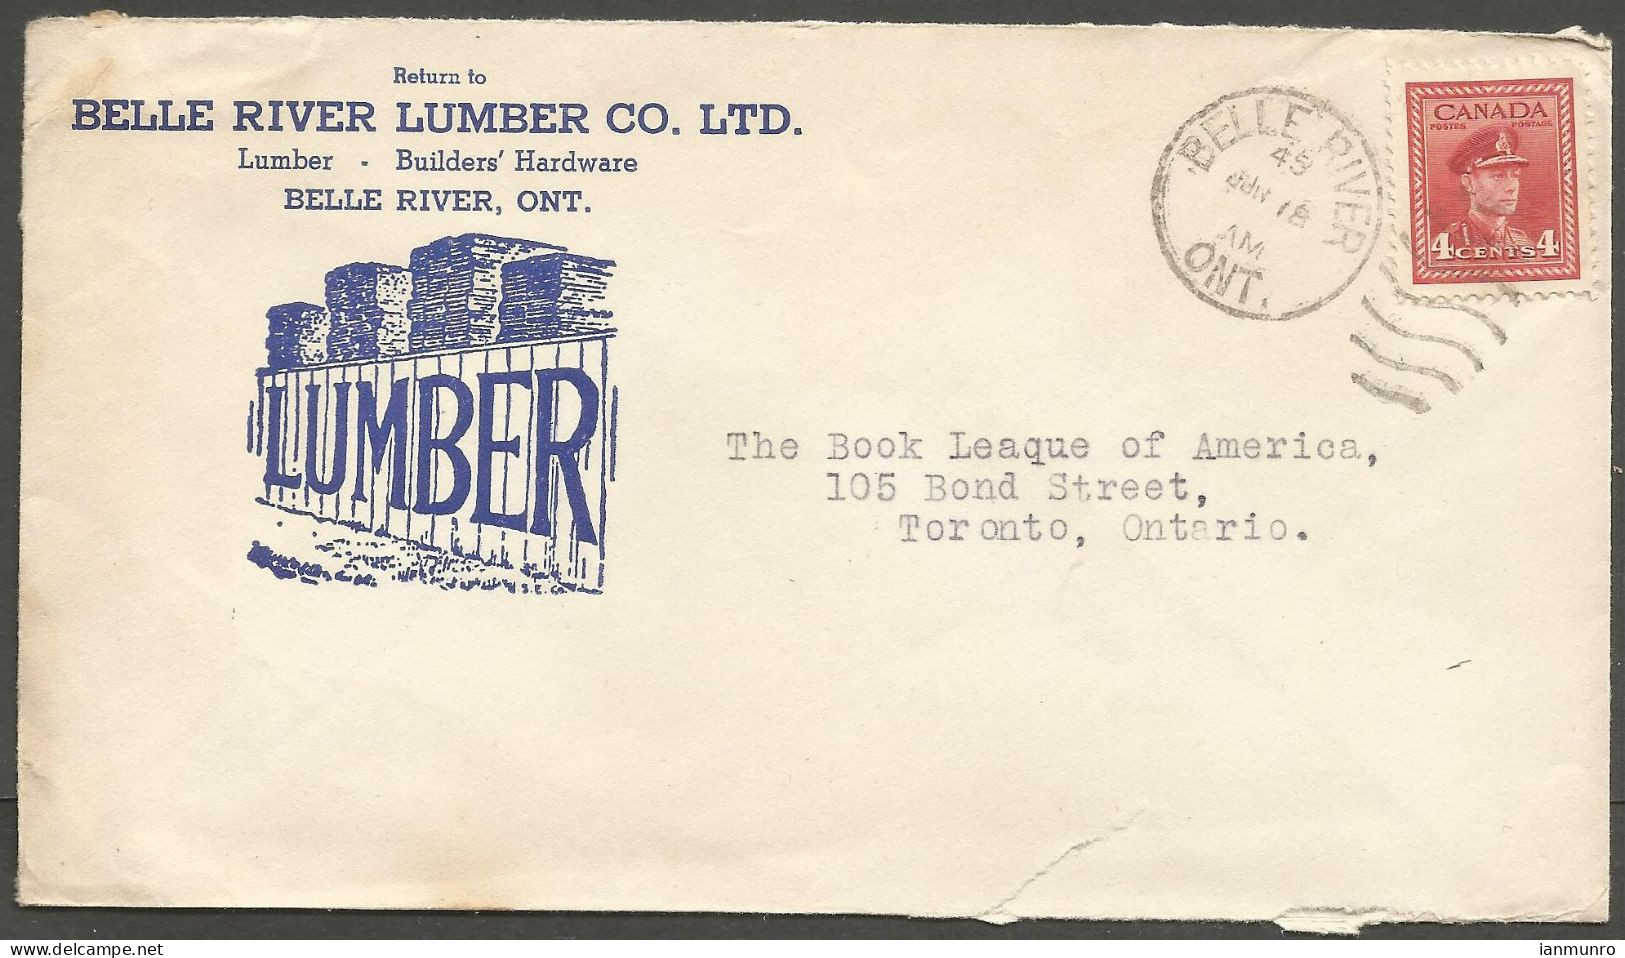 1945 Lumber Hardware Illustrated Advertising Cover 4c War Duplex Belle River Ontario - Postal History